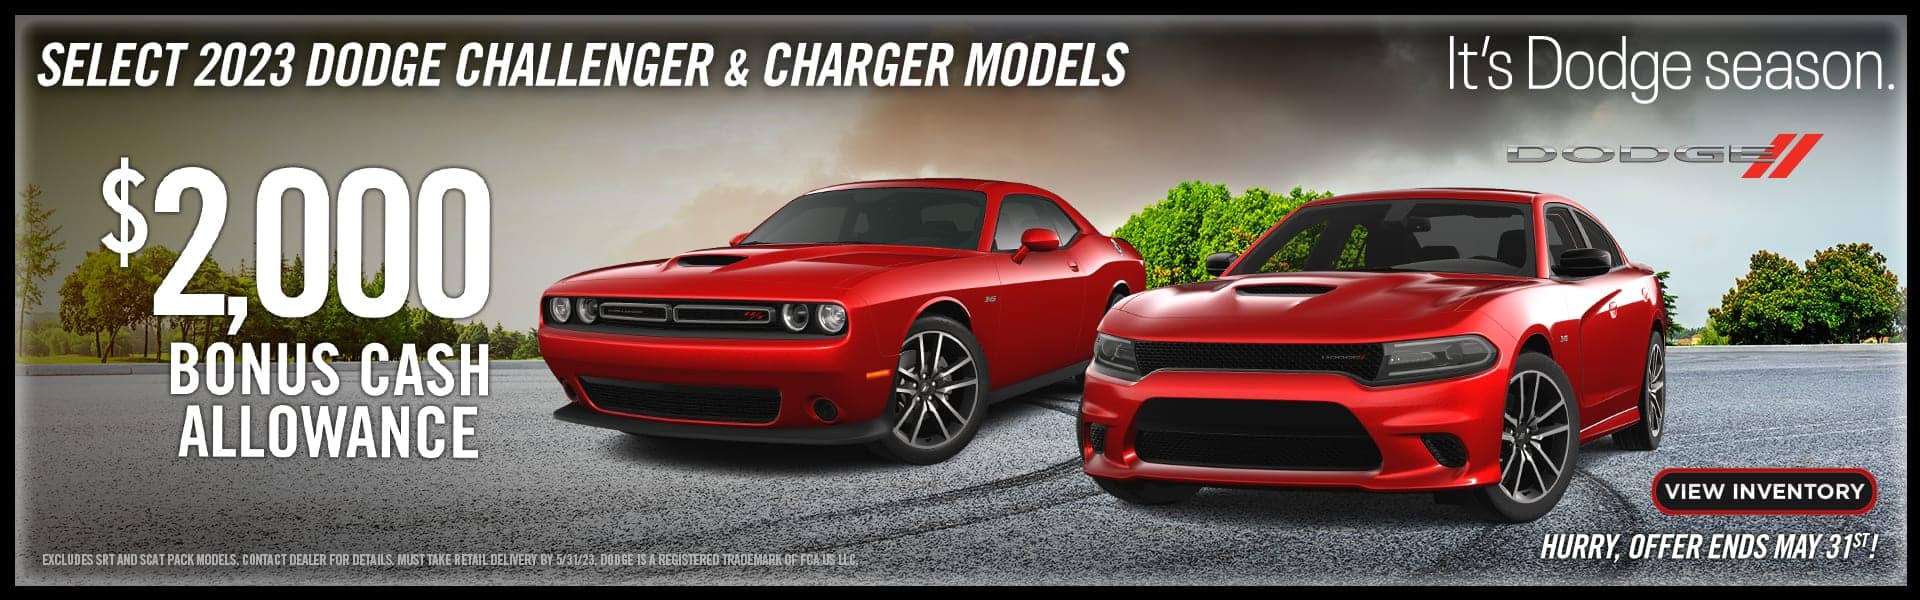 Dodge Charger & Challenger offer